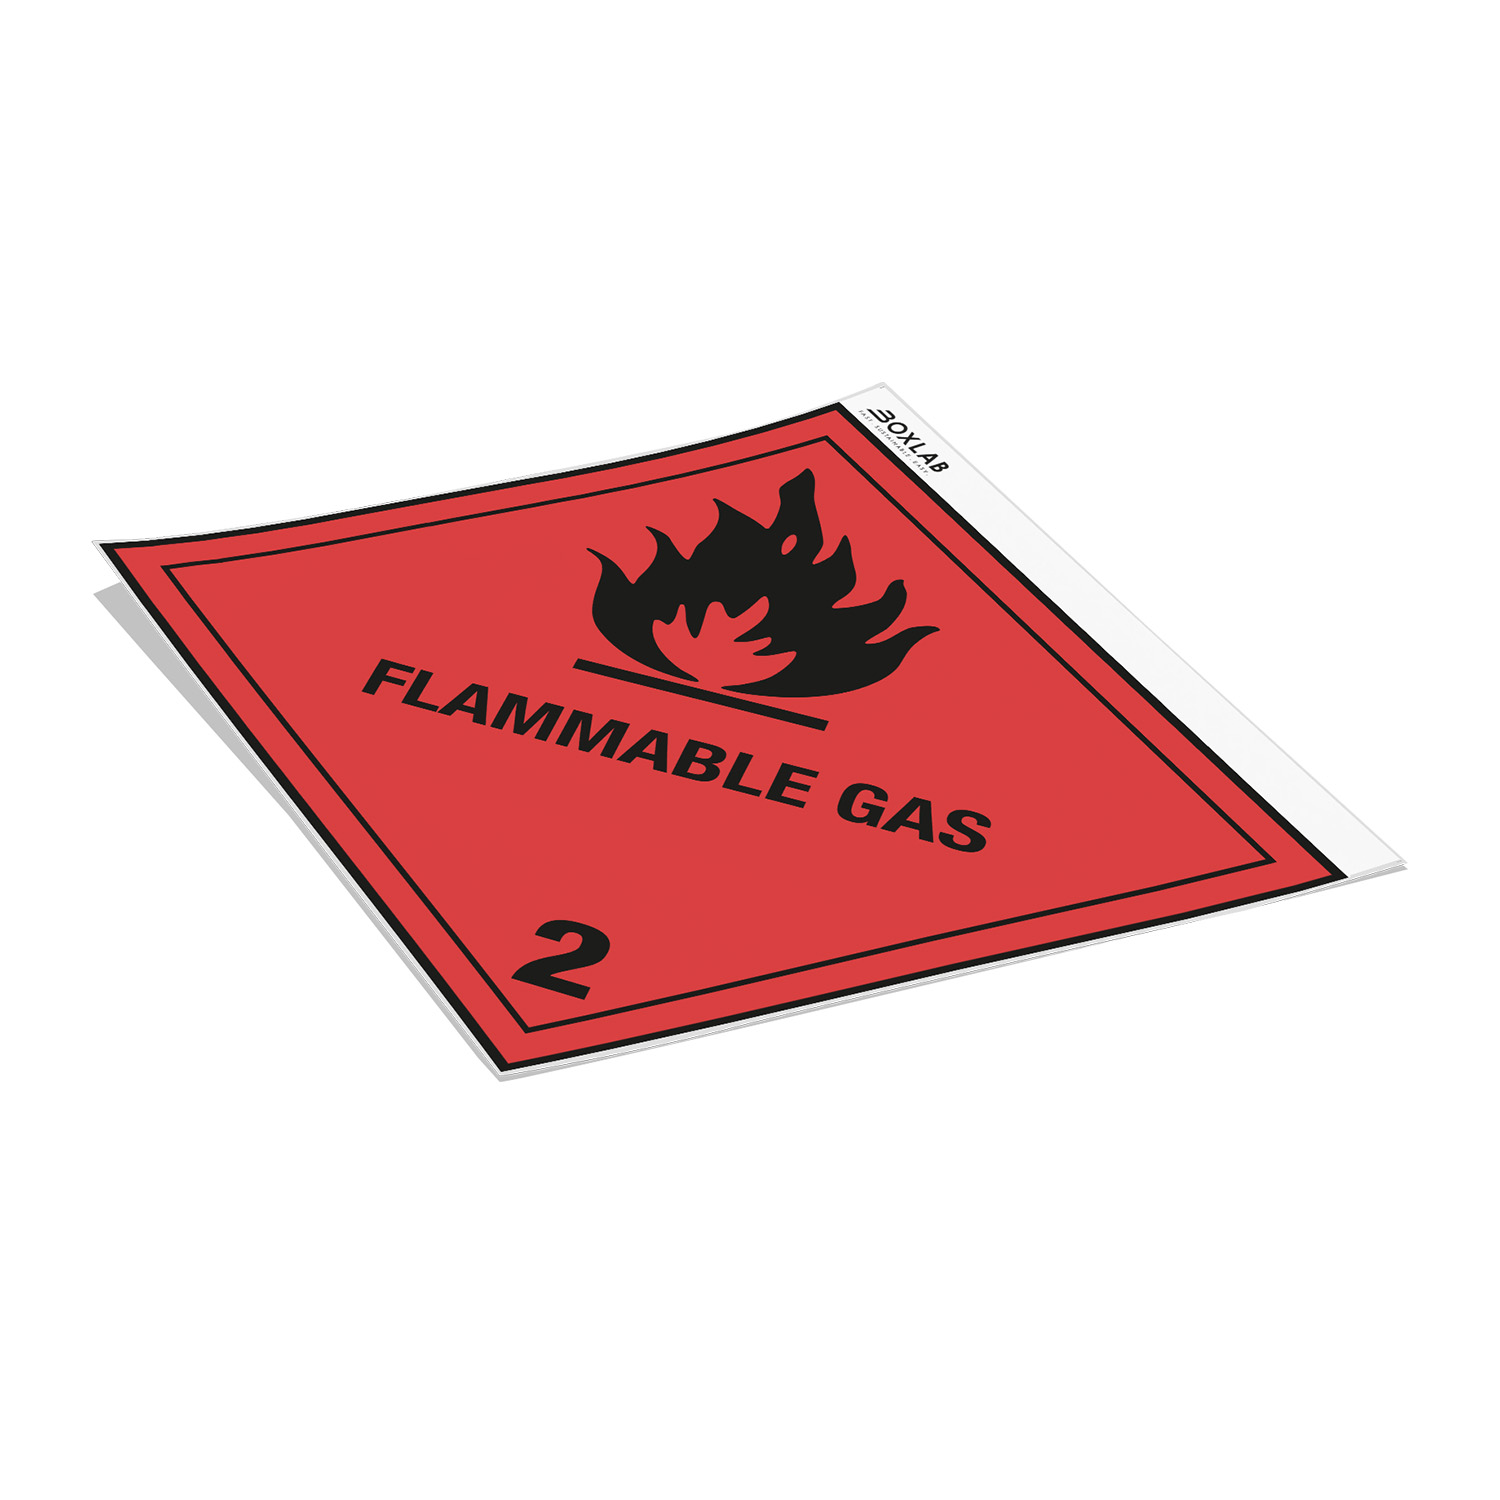 Placard Kl. 2.1, Flammable Gas, 250x250mm, 1 Stk pro Blatt